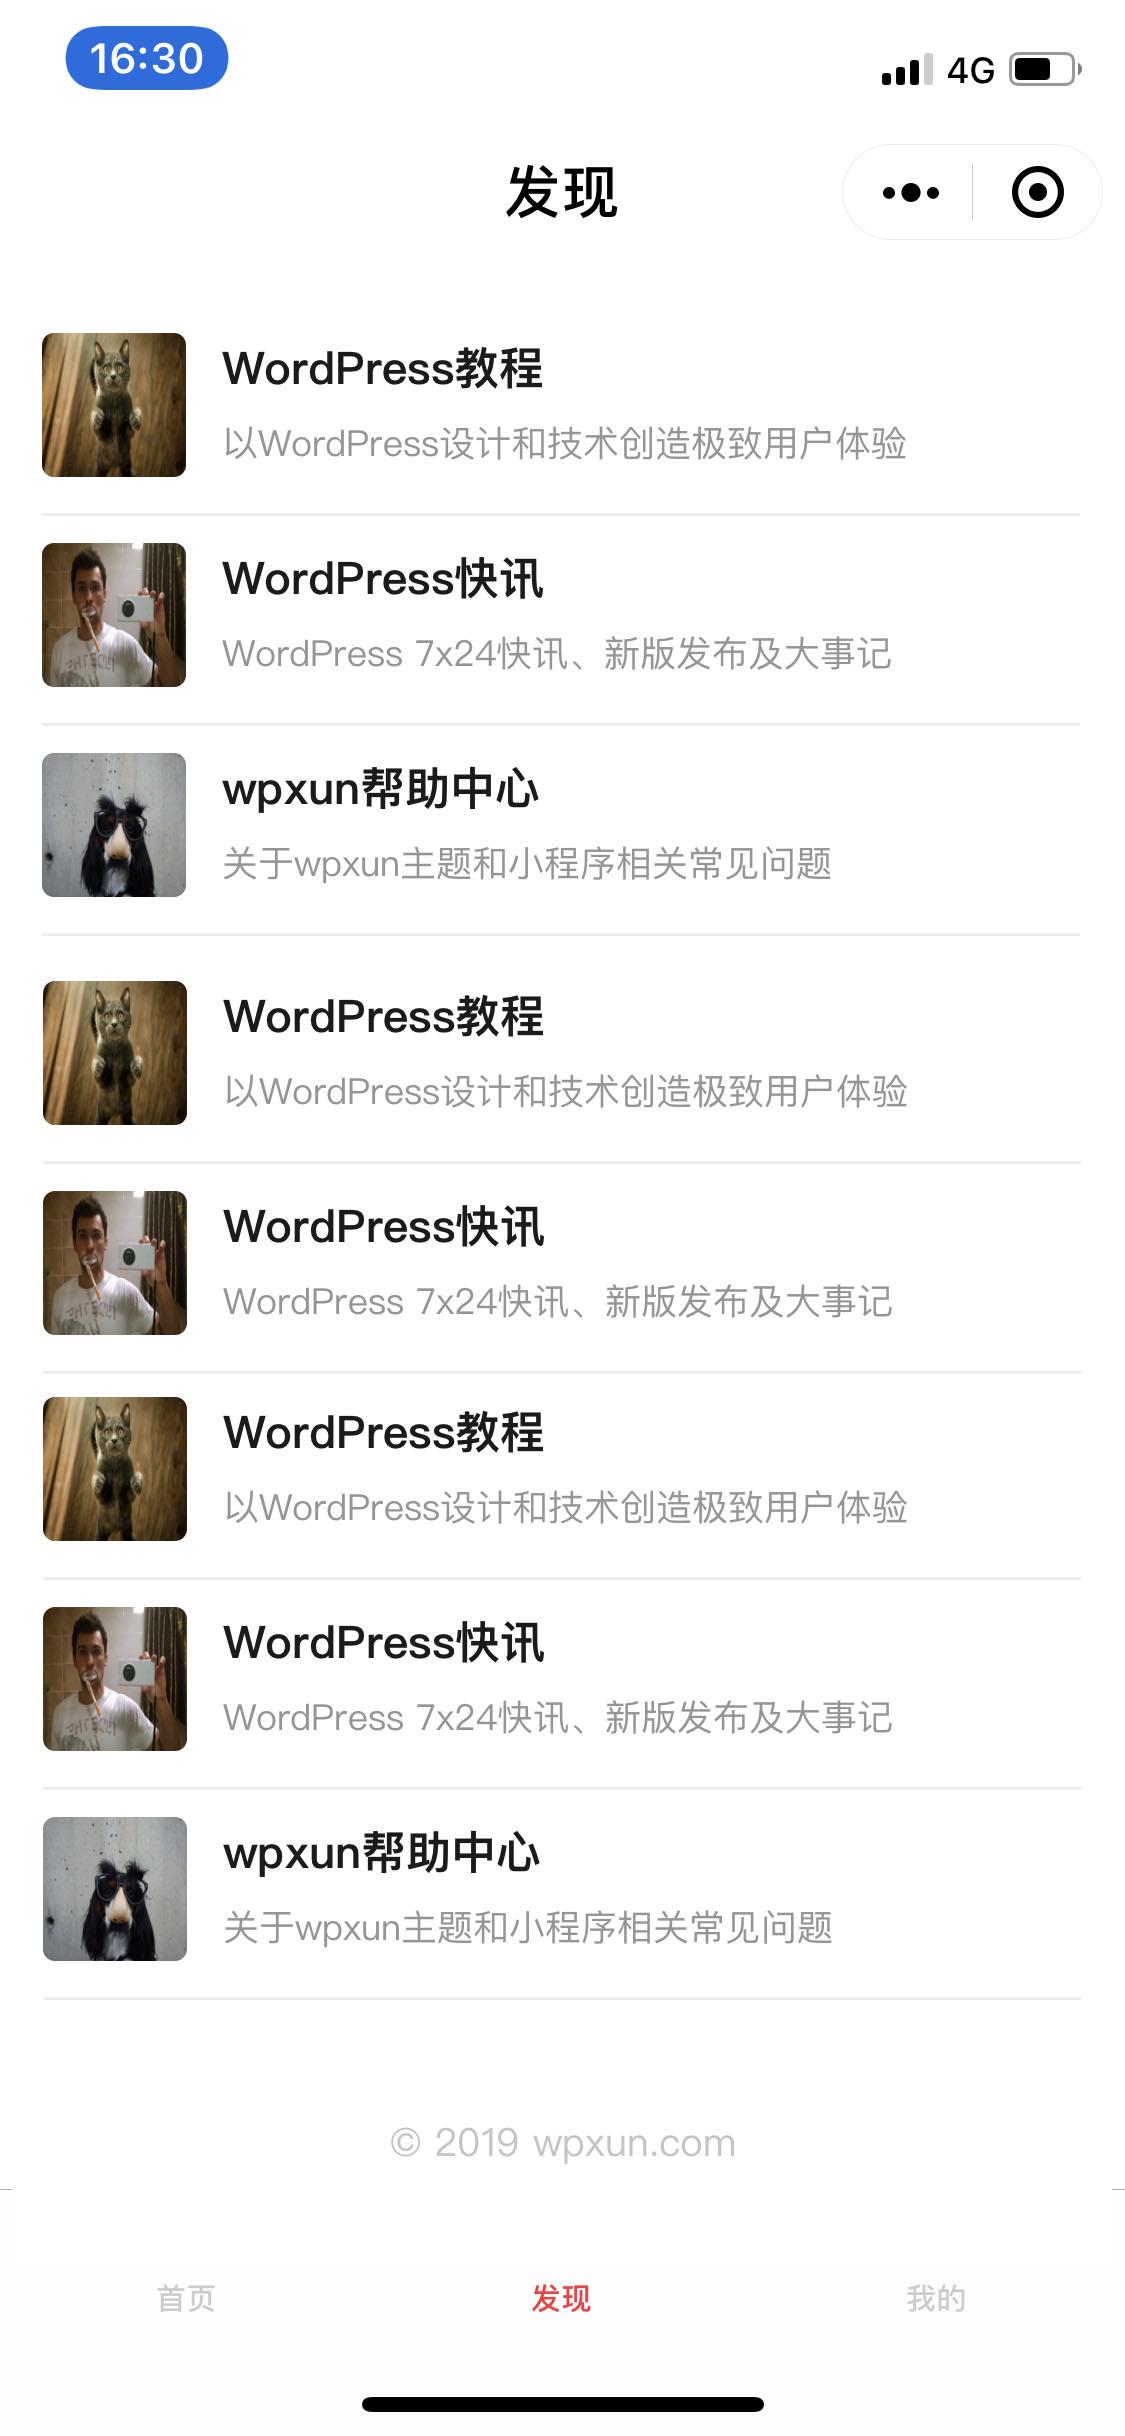 wpxun WordPress版_wpxun WordPress版小程序_wpxun WordPress版微信小程序